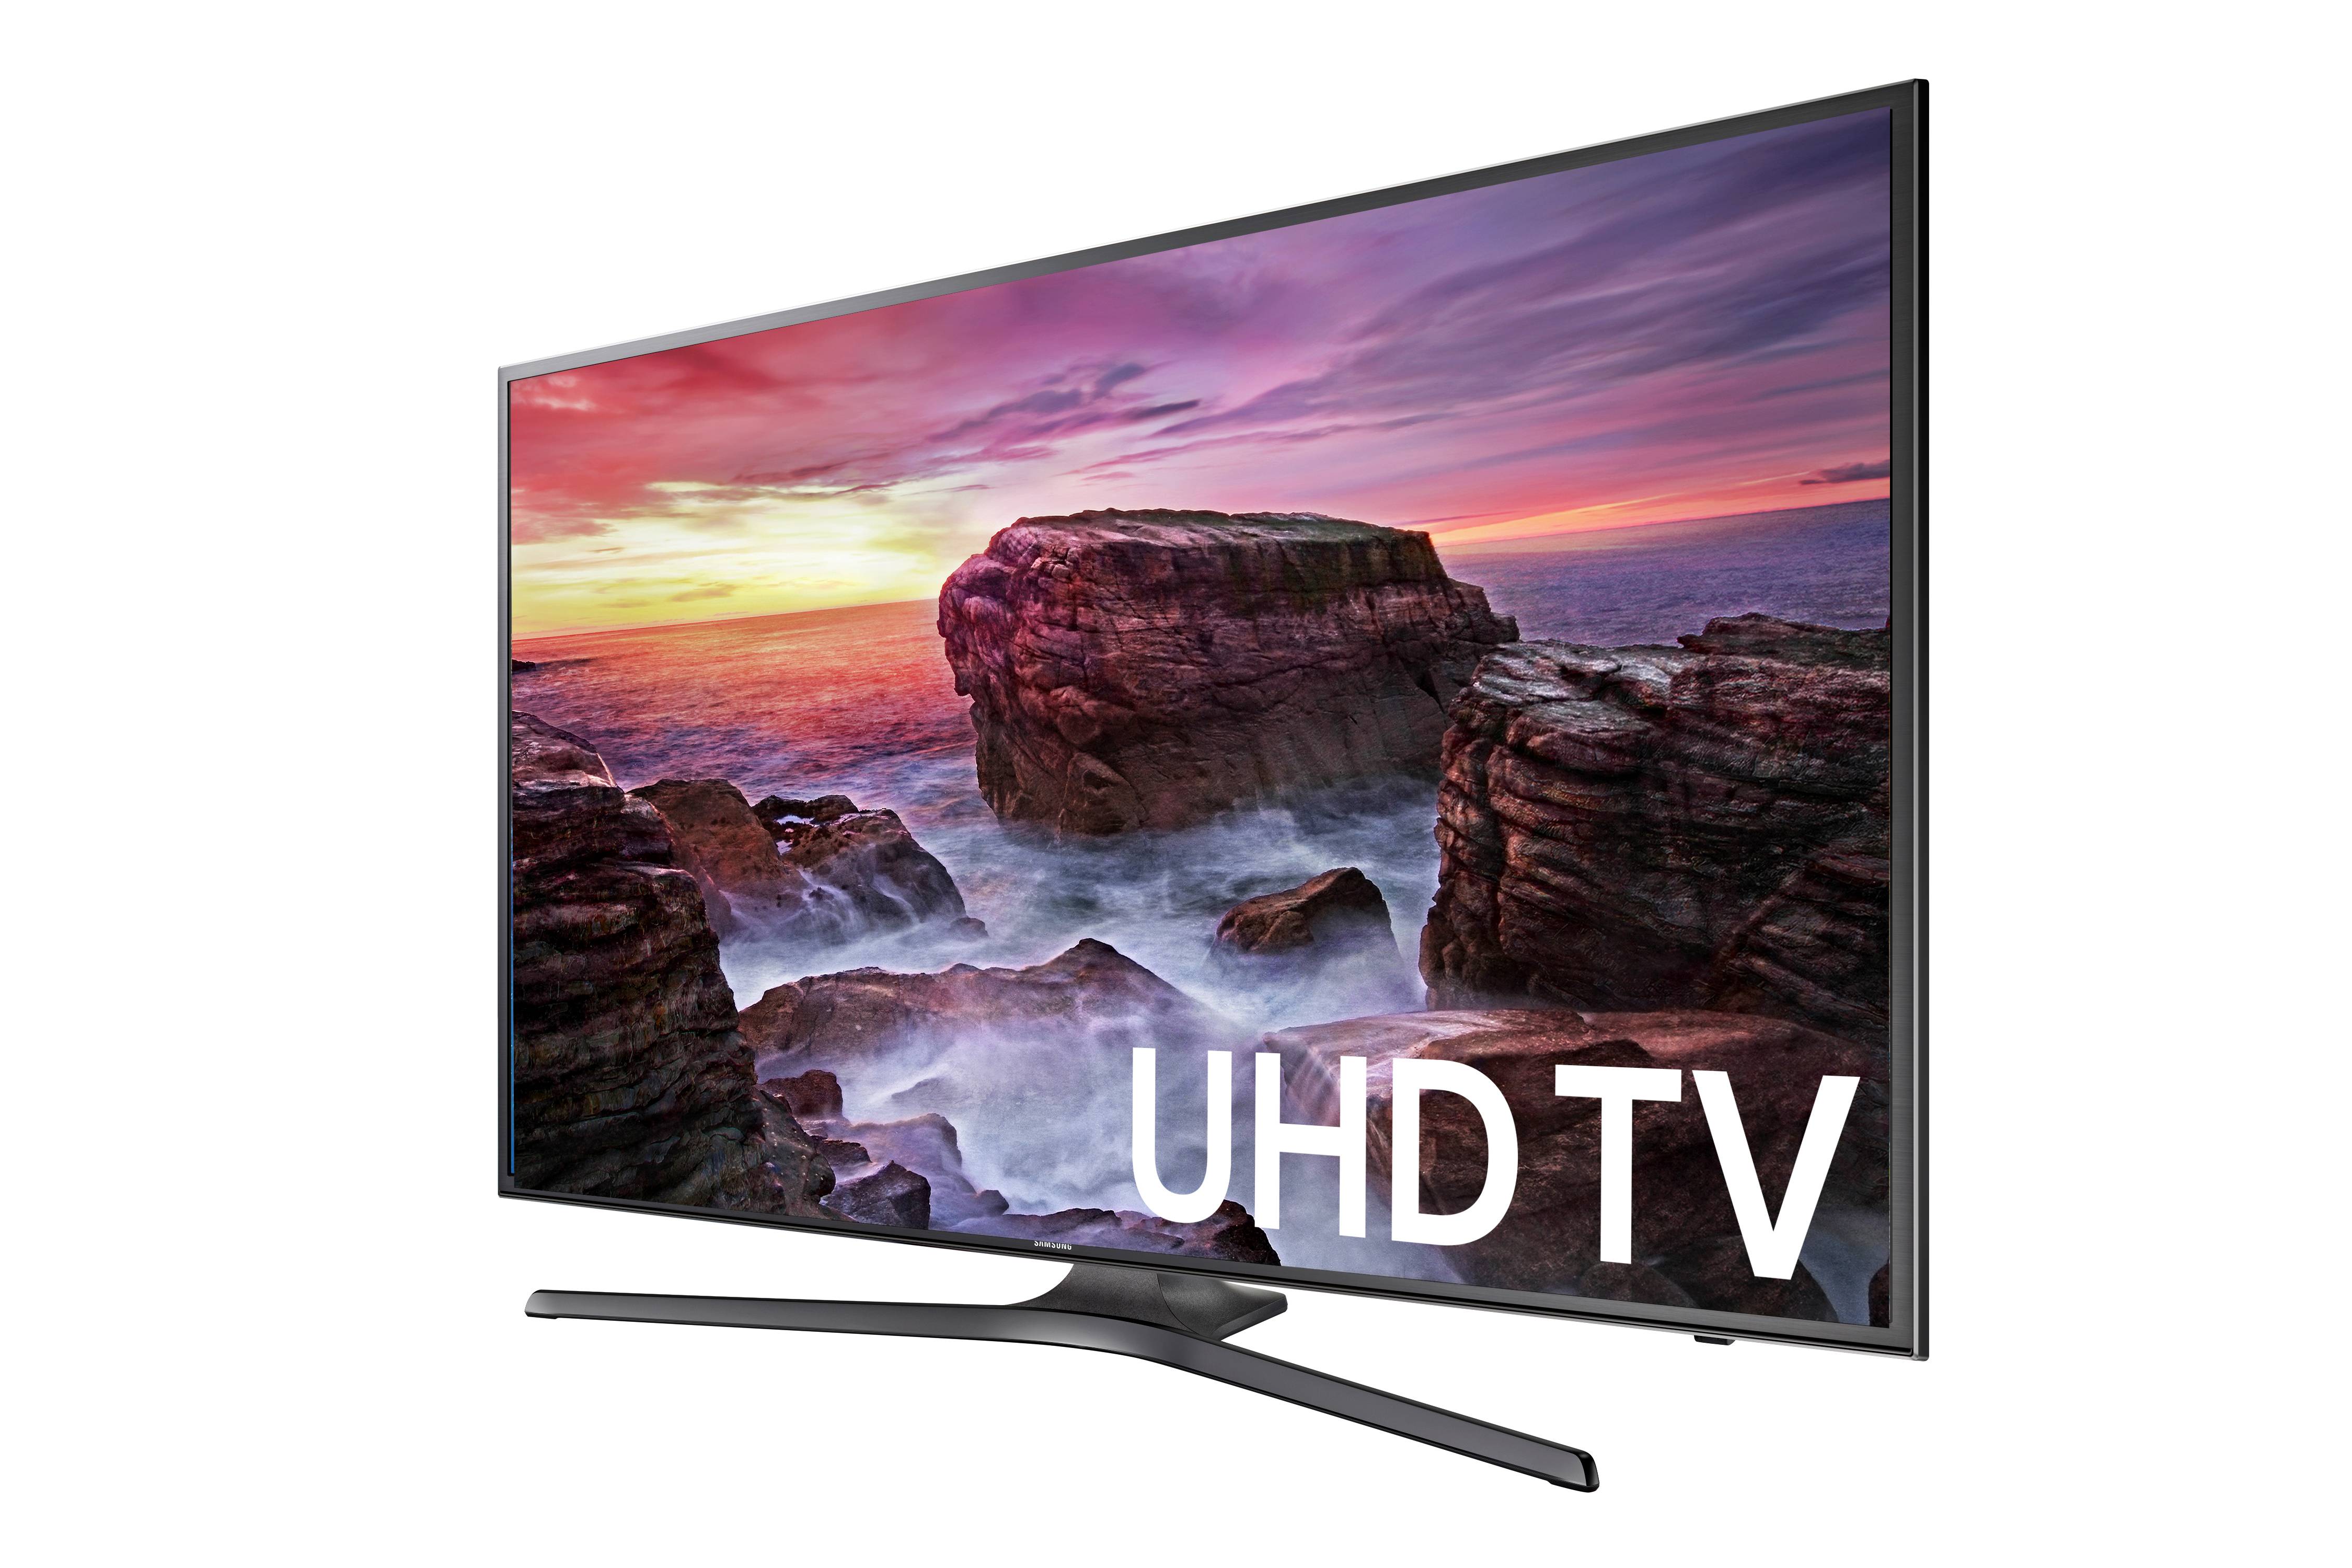 Restored Samsung 55" Class 4K (2160P) Smart LED TV (UN55MU6290FXZA) (Refurbished) - image 2 of 5